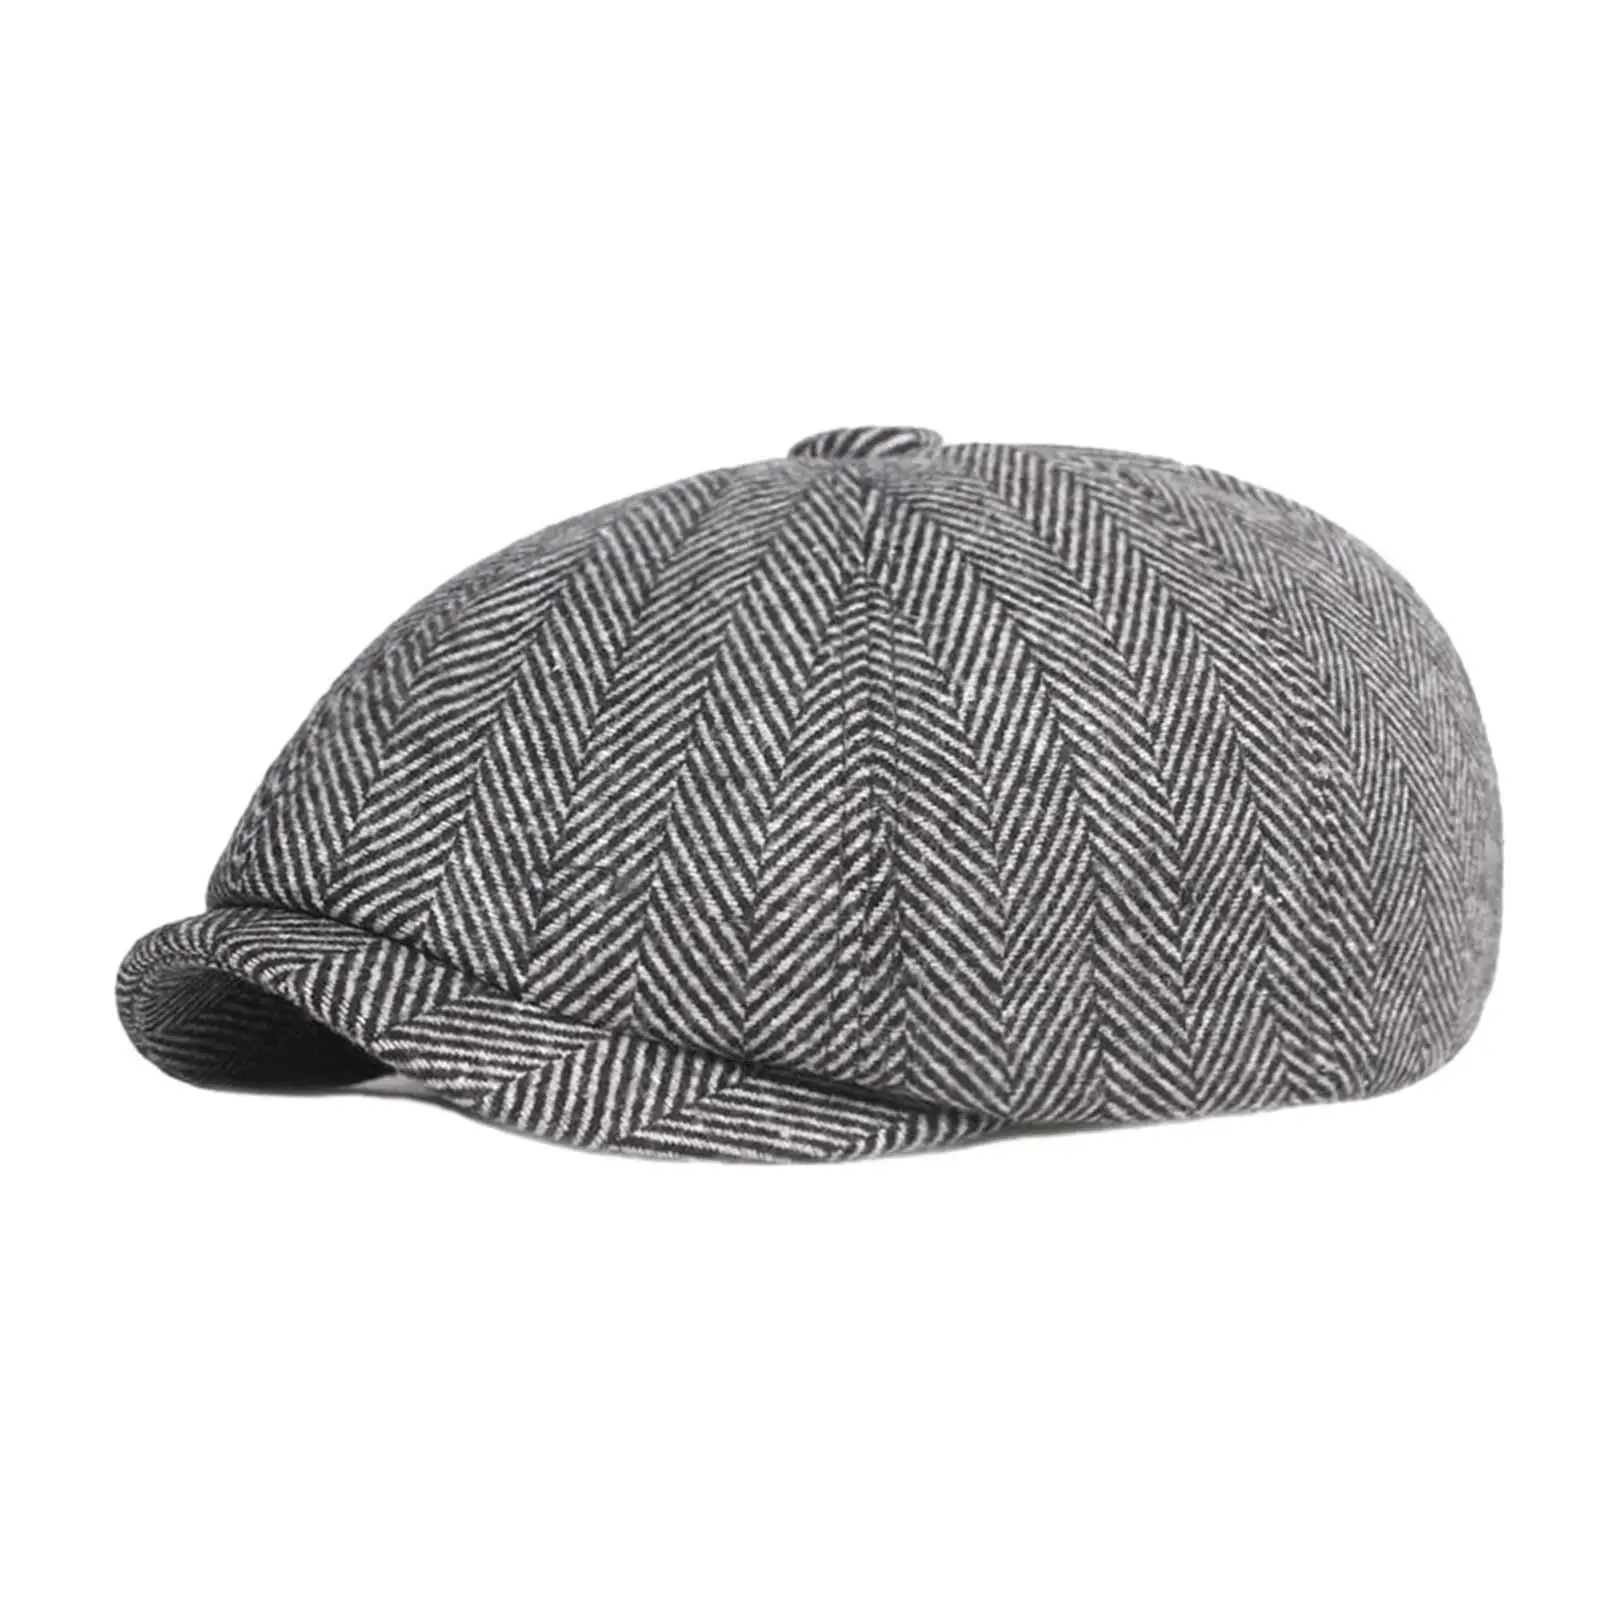 Baker Boy Hat Flat Cap for Men Birthday Gift Classic Casual Winter Beret Cap Fashion Newsboy Cap Beret Hat for Outdoor Travel